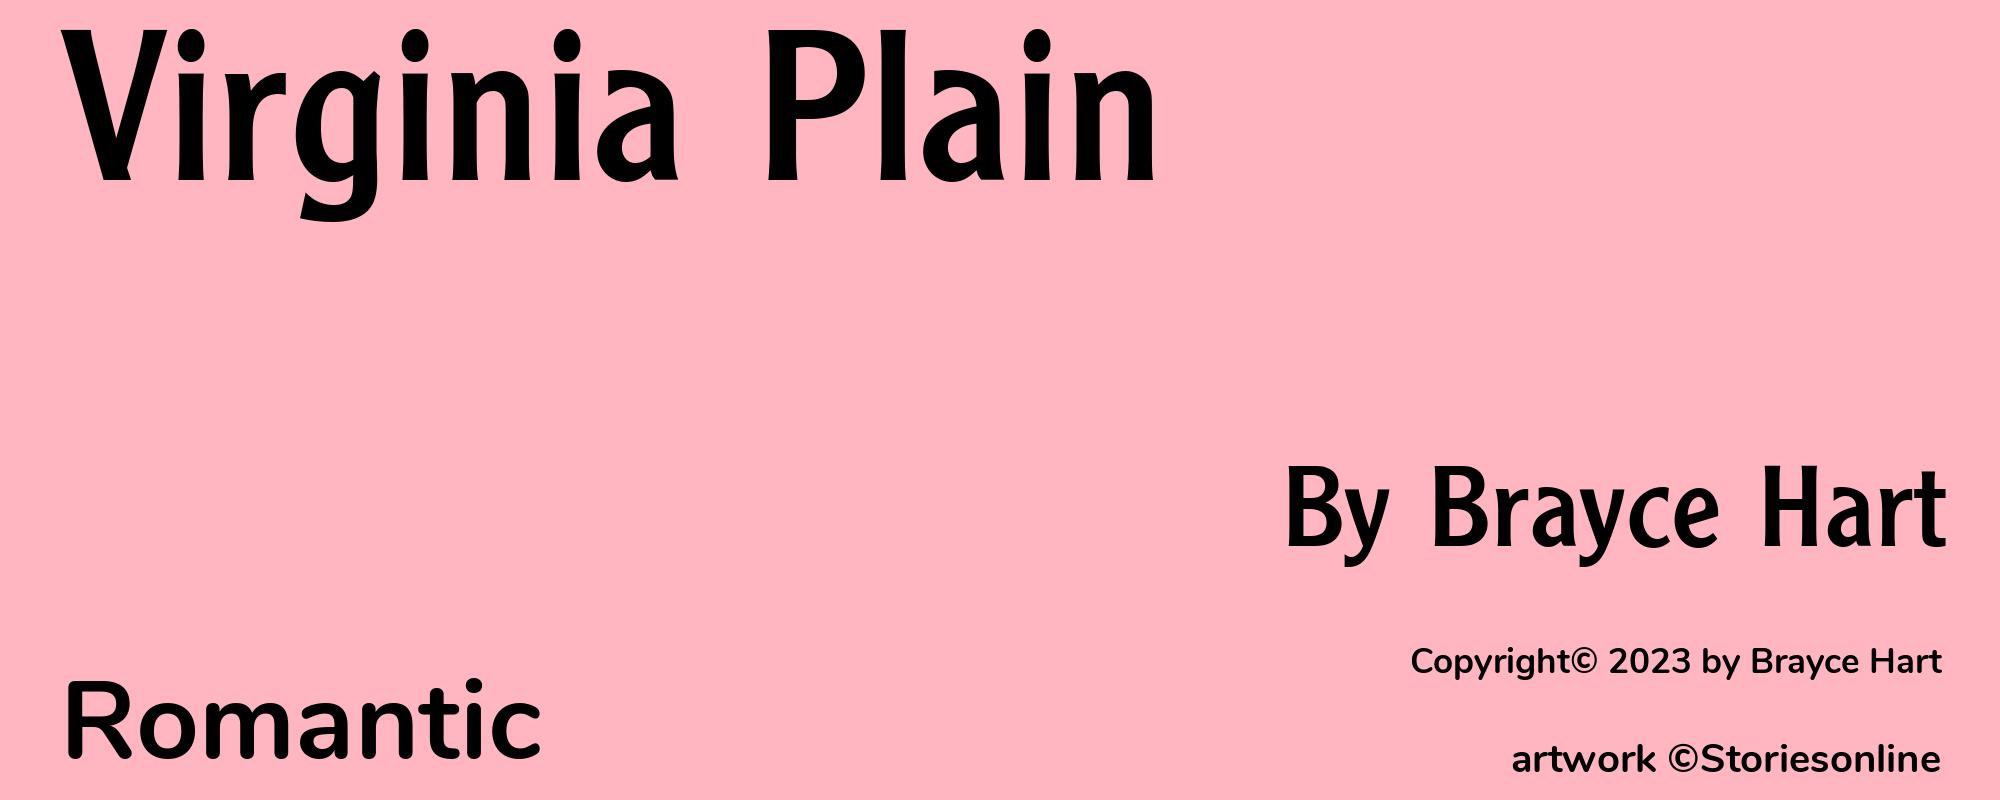 Virginia Plain - Cover